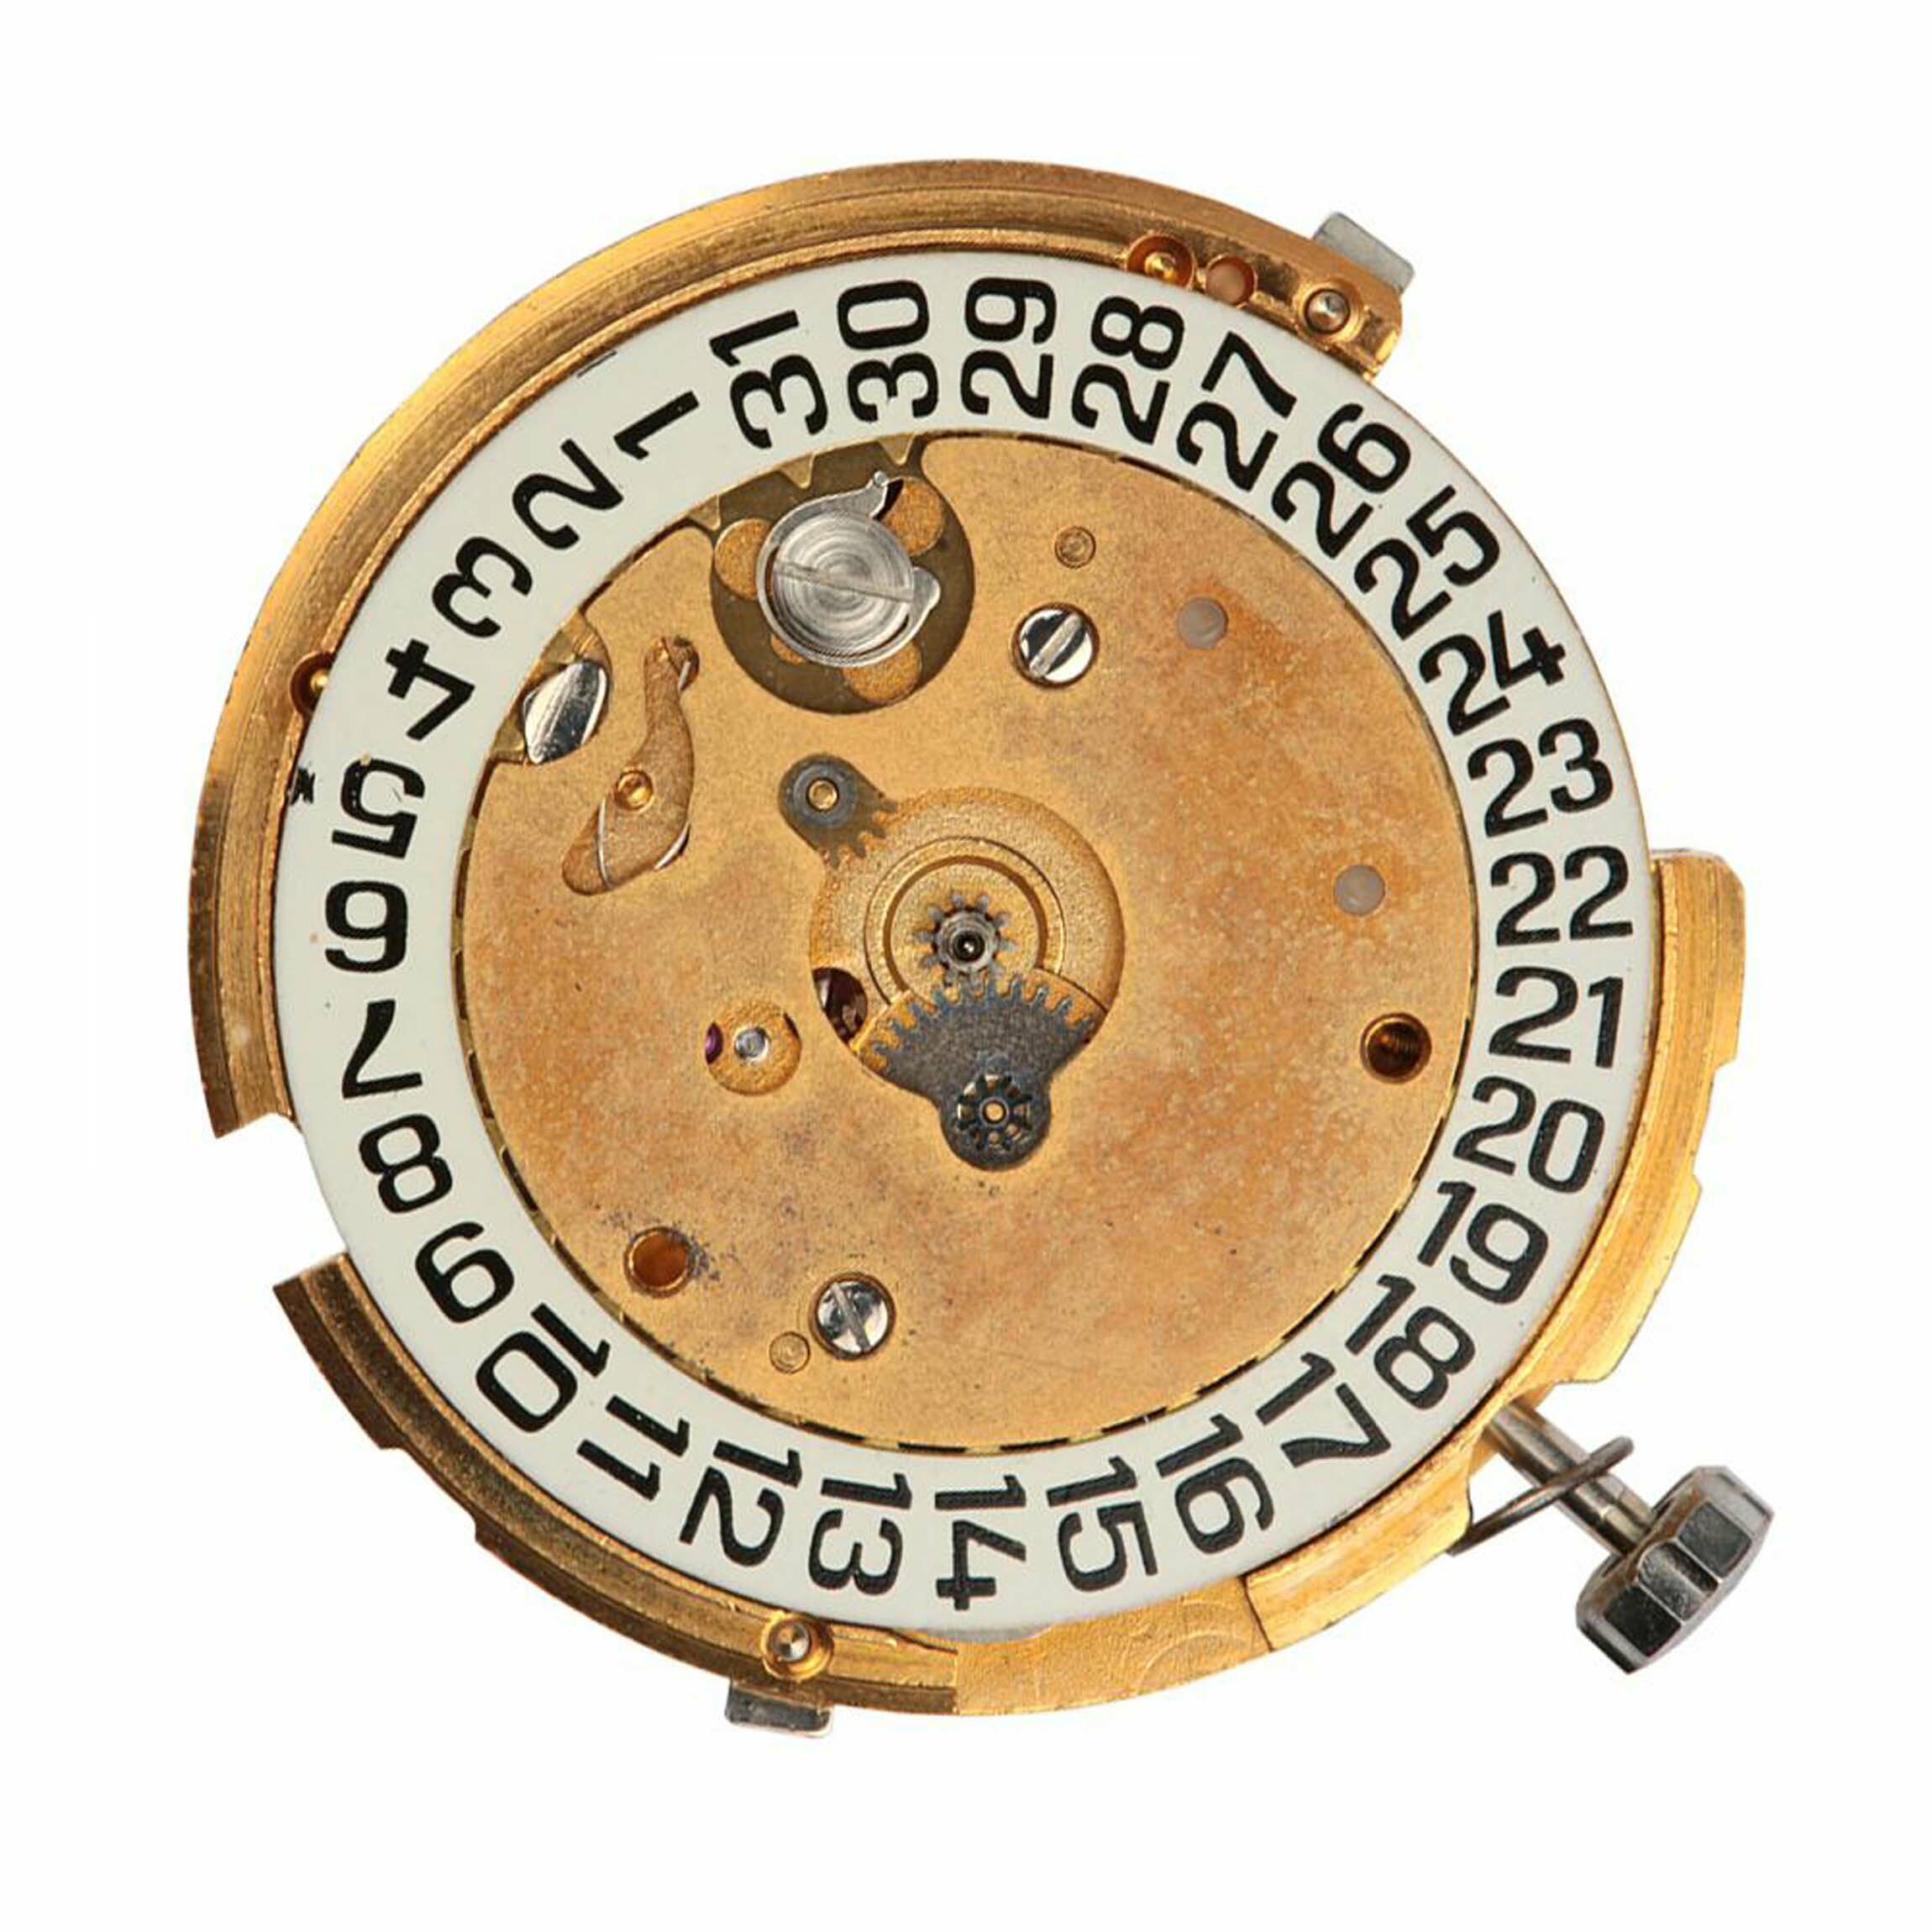 Armbanduhr, Junghans, Schramberg, um 1970 (Deutsches Uhrenmuseum CC BY-SA)